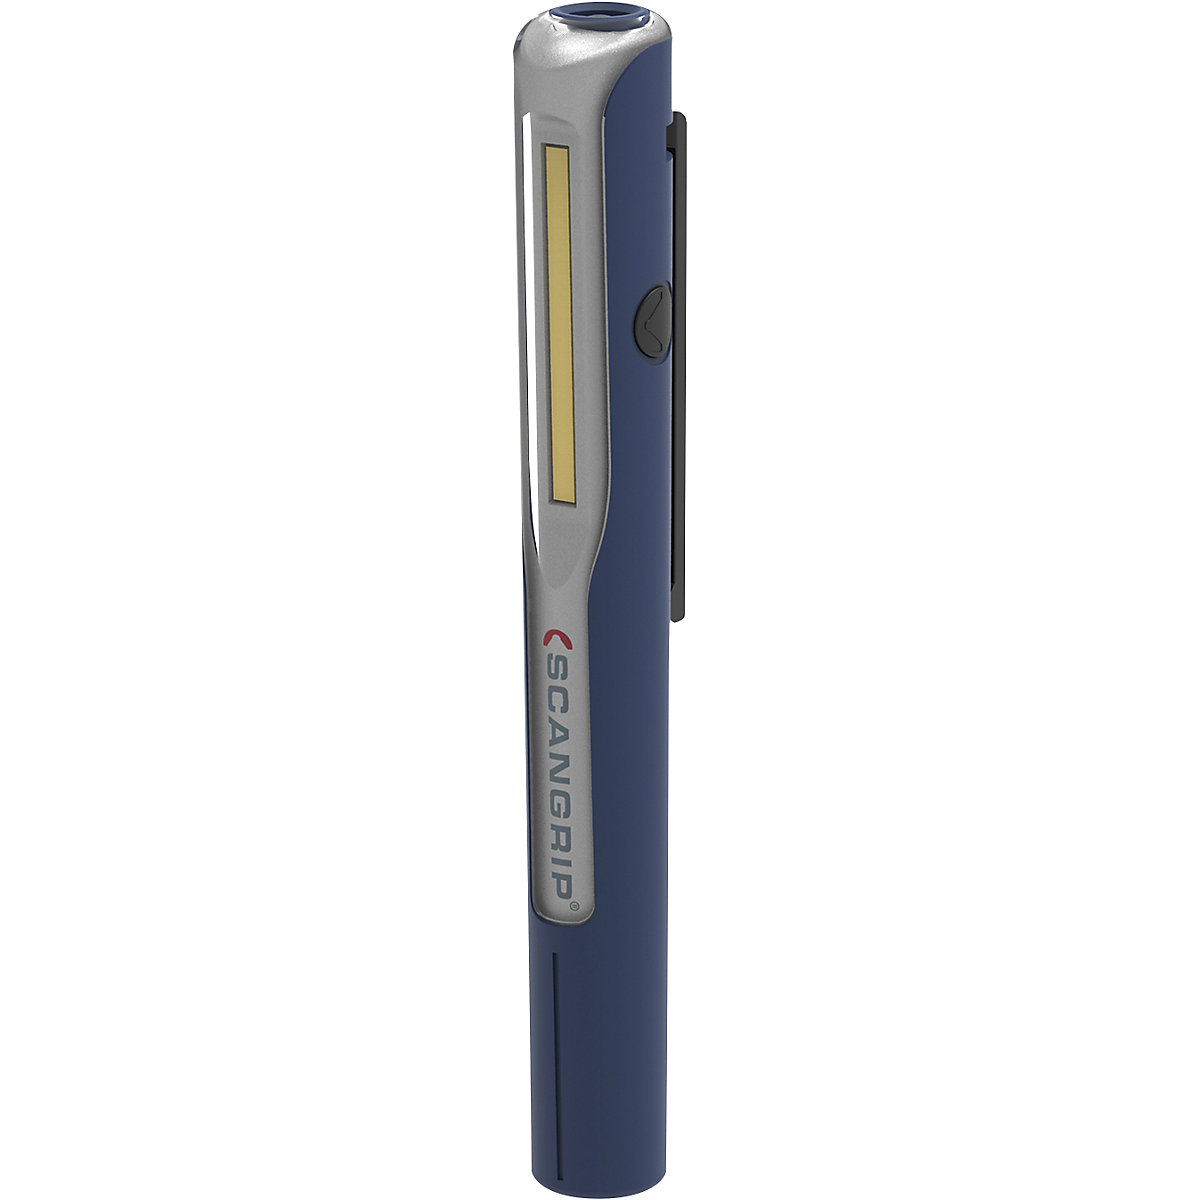 Akumulatorowa latarka długopisowa LED MAG PEN 3 – SCANGRIP (Zdjęcie produktu 3)-2